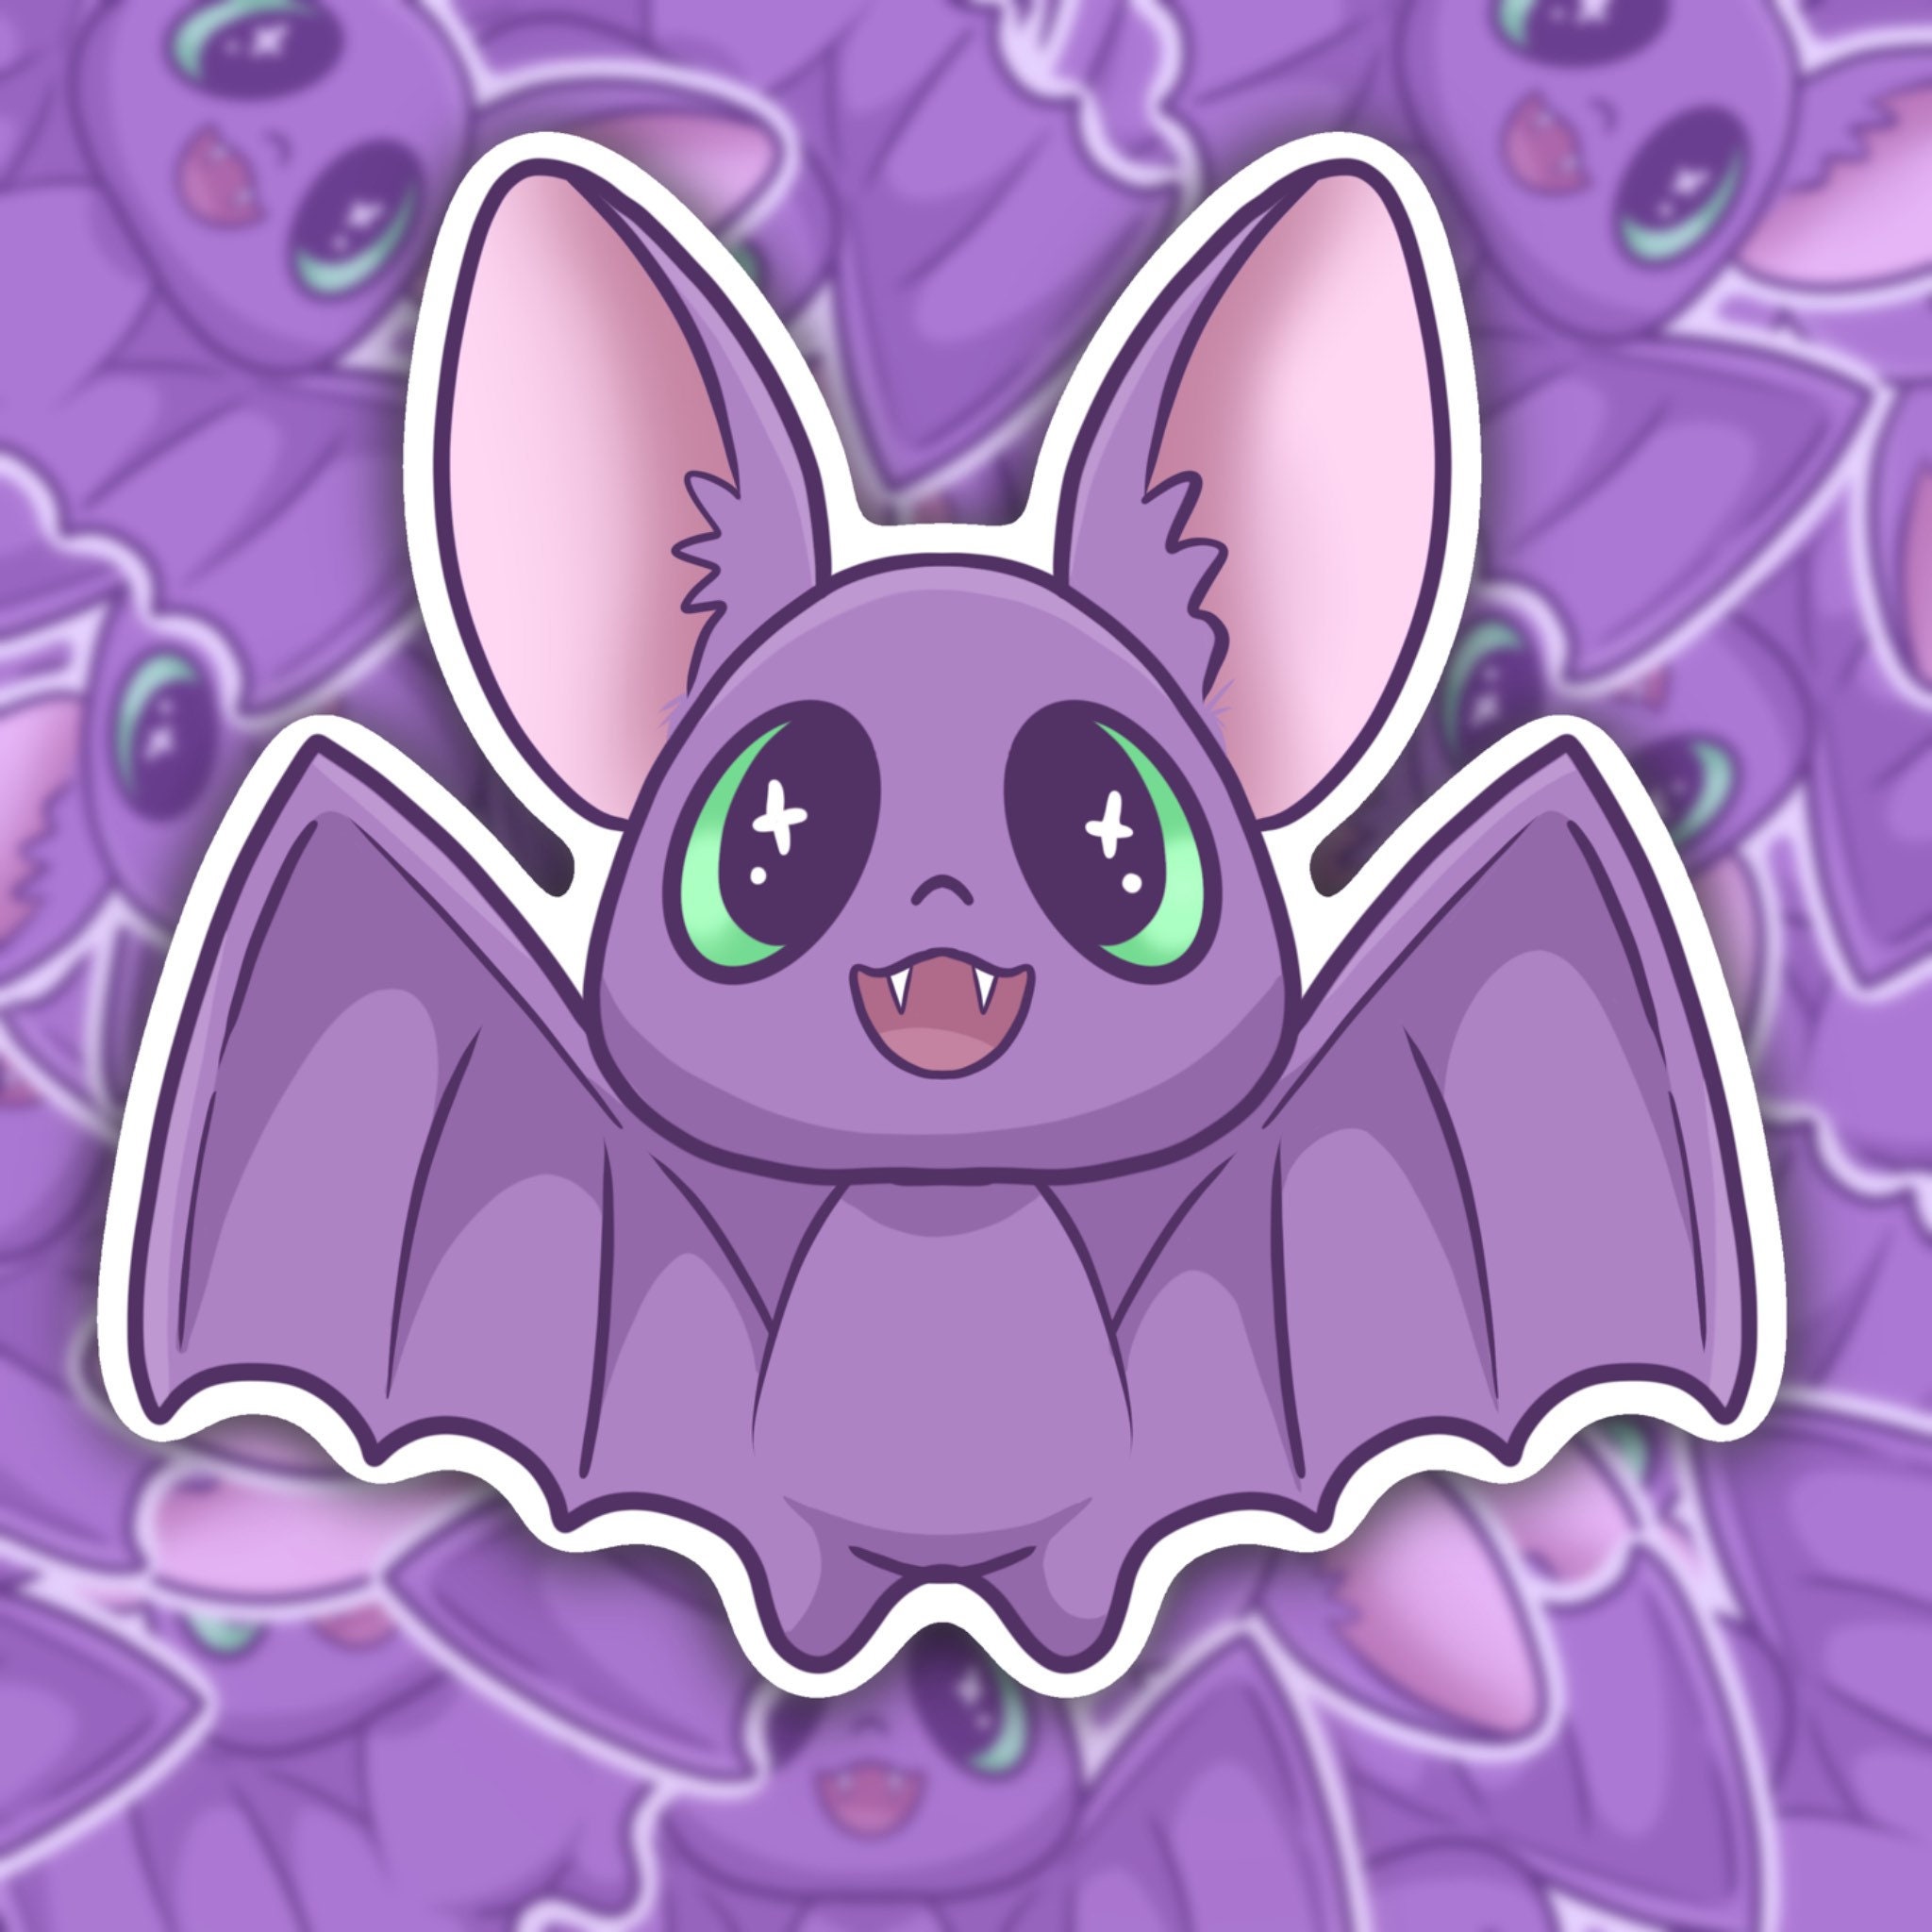 Mysterious Bat from Rosario + Vampire